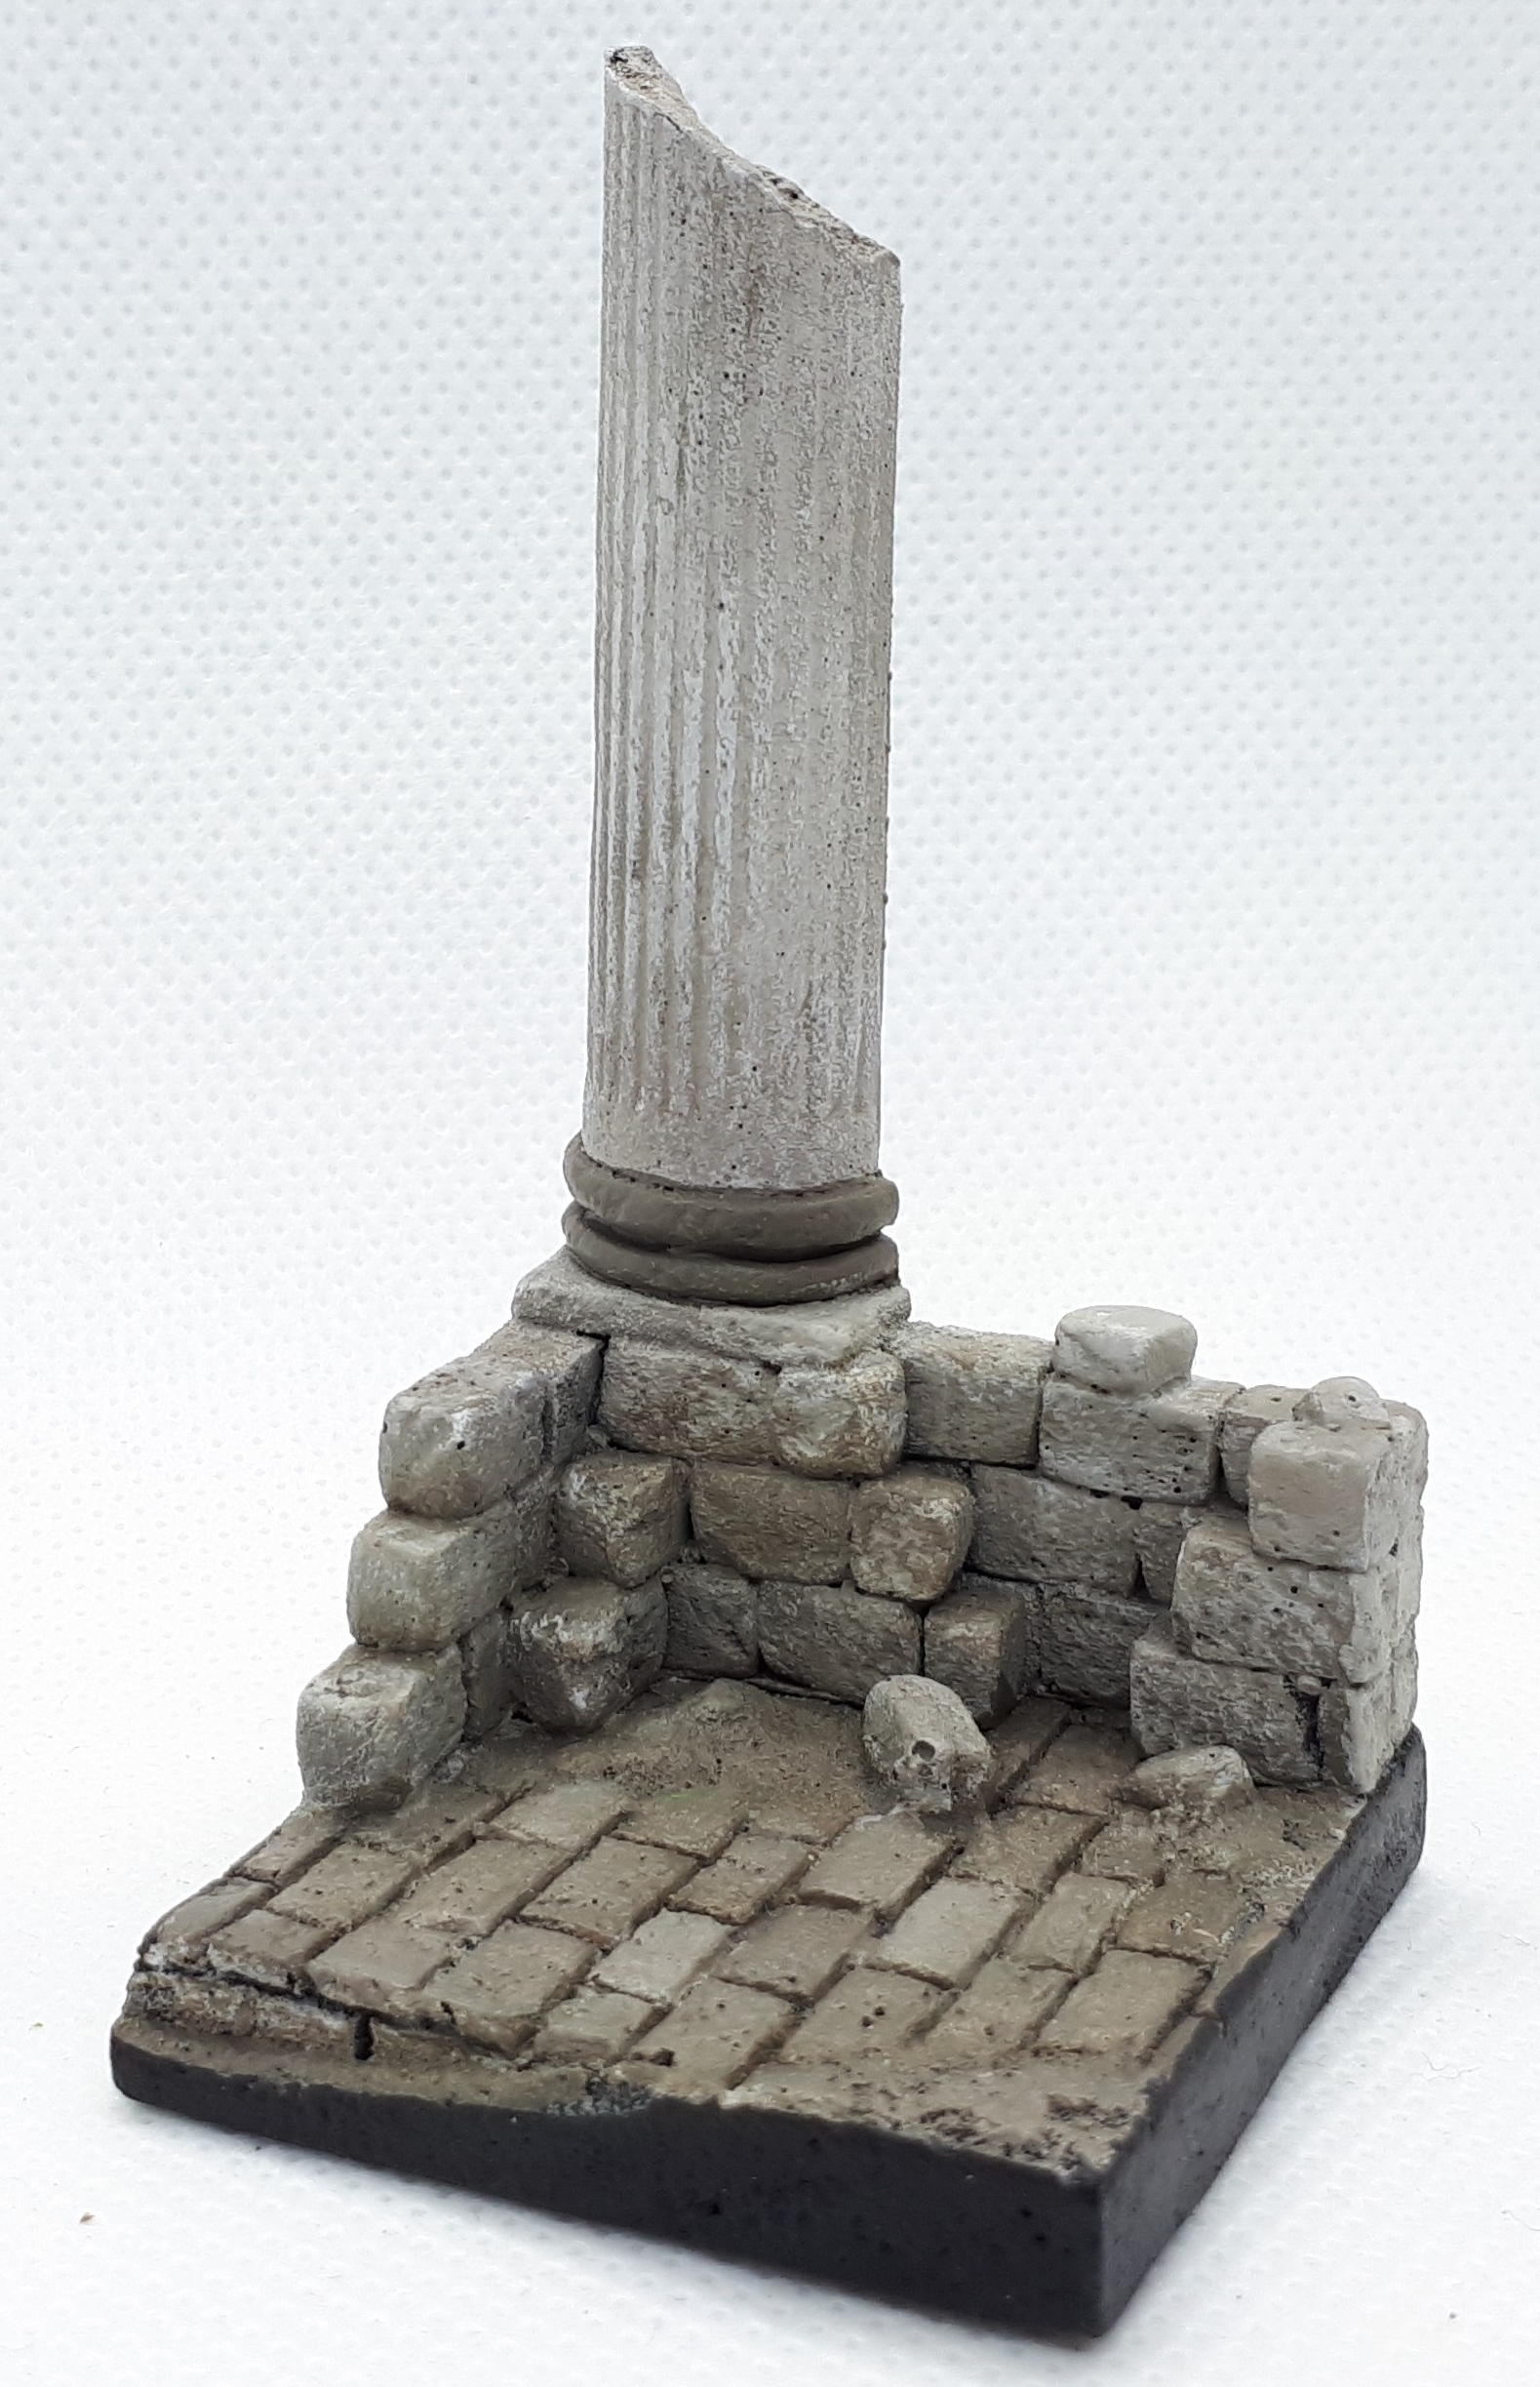 "Pillar" vignette base (4x4cm)